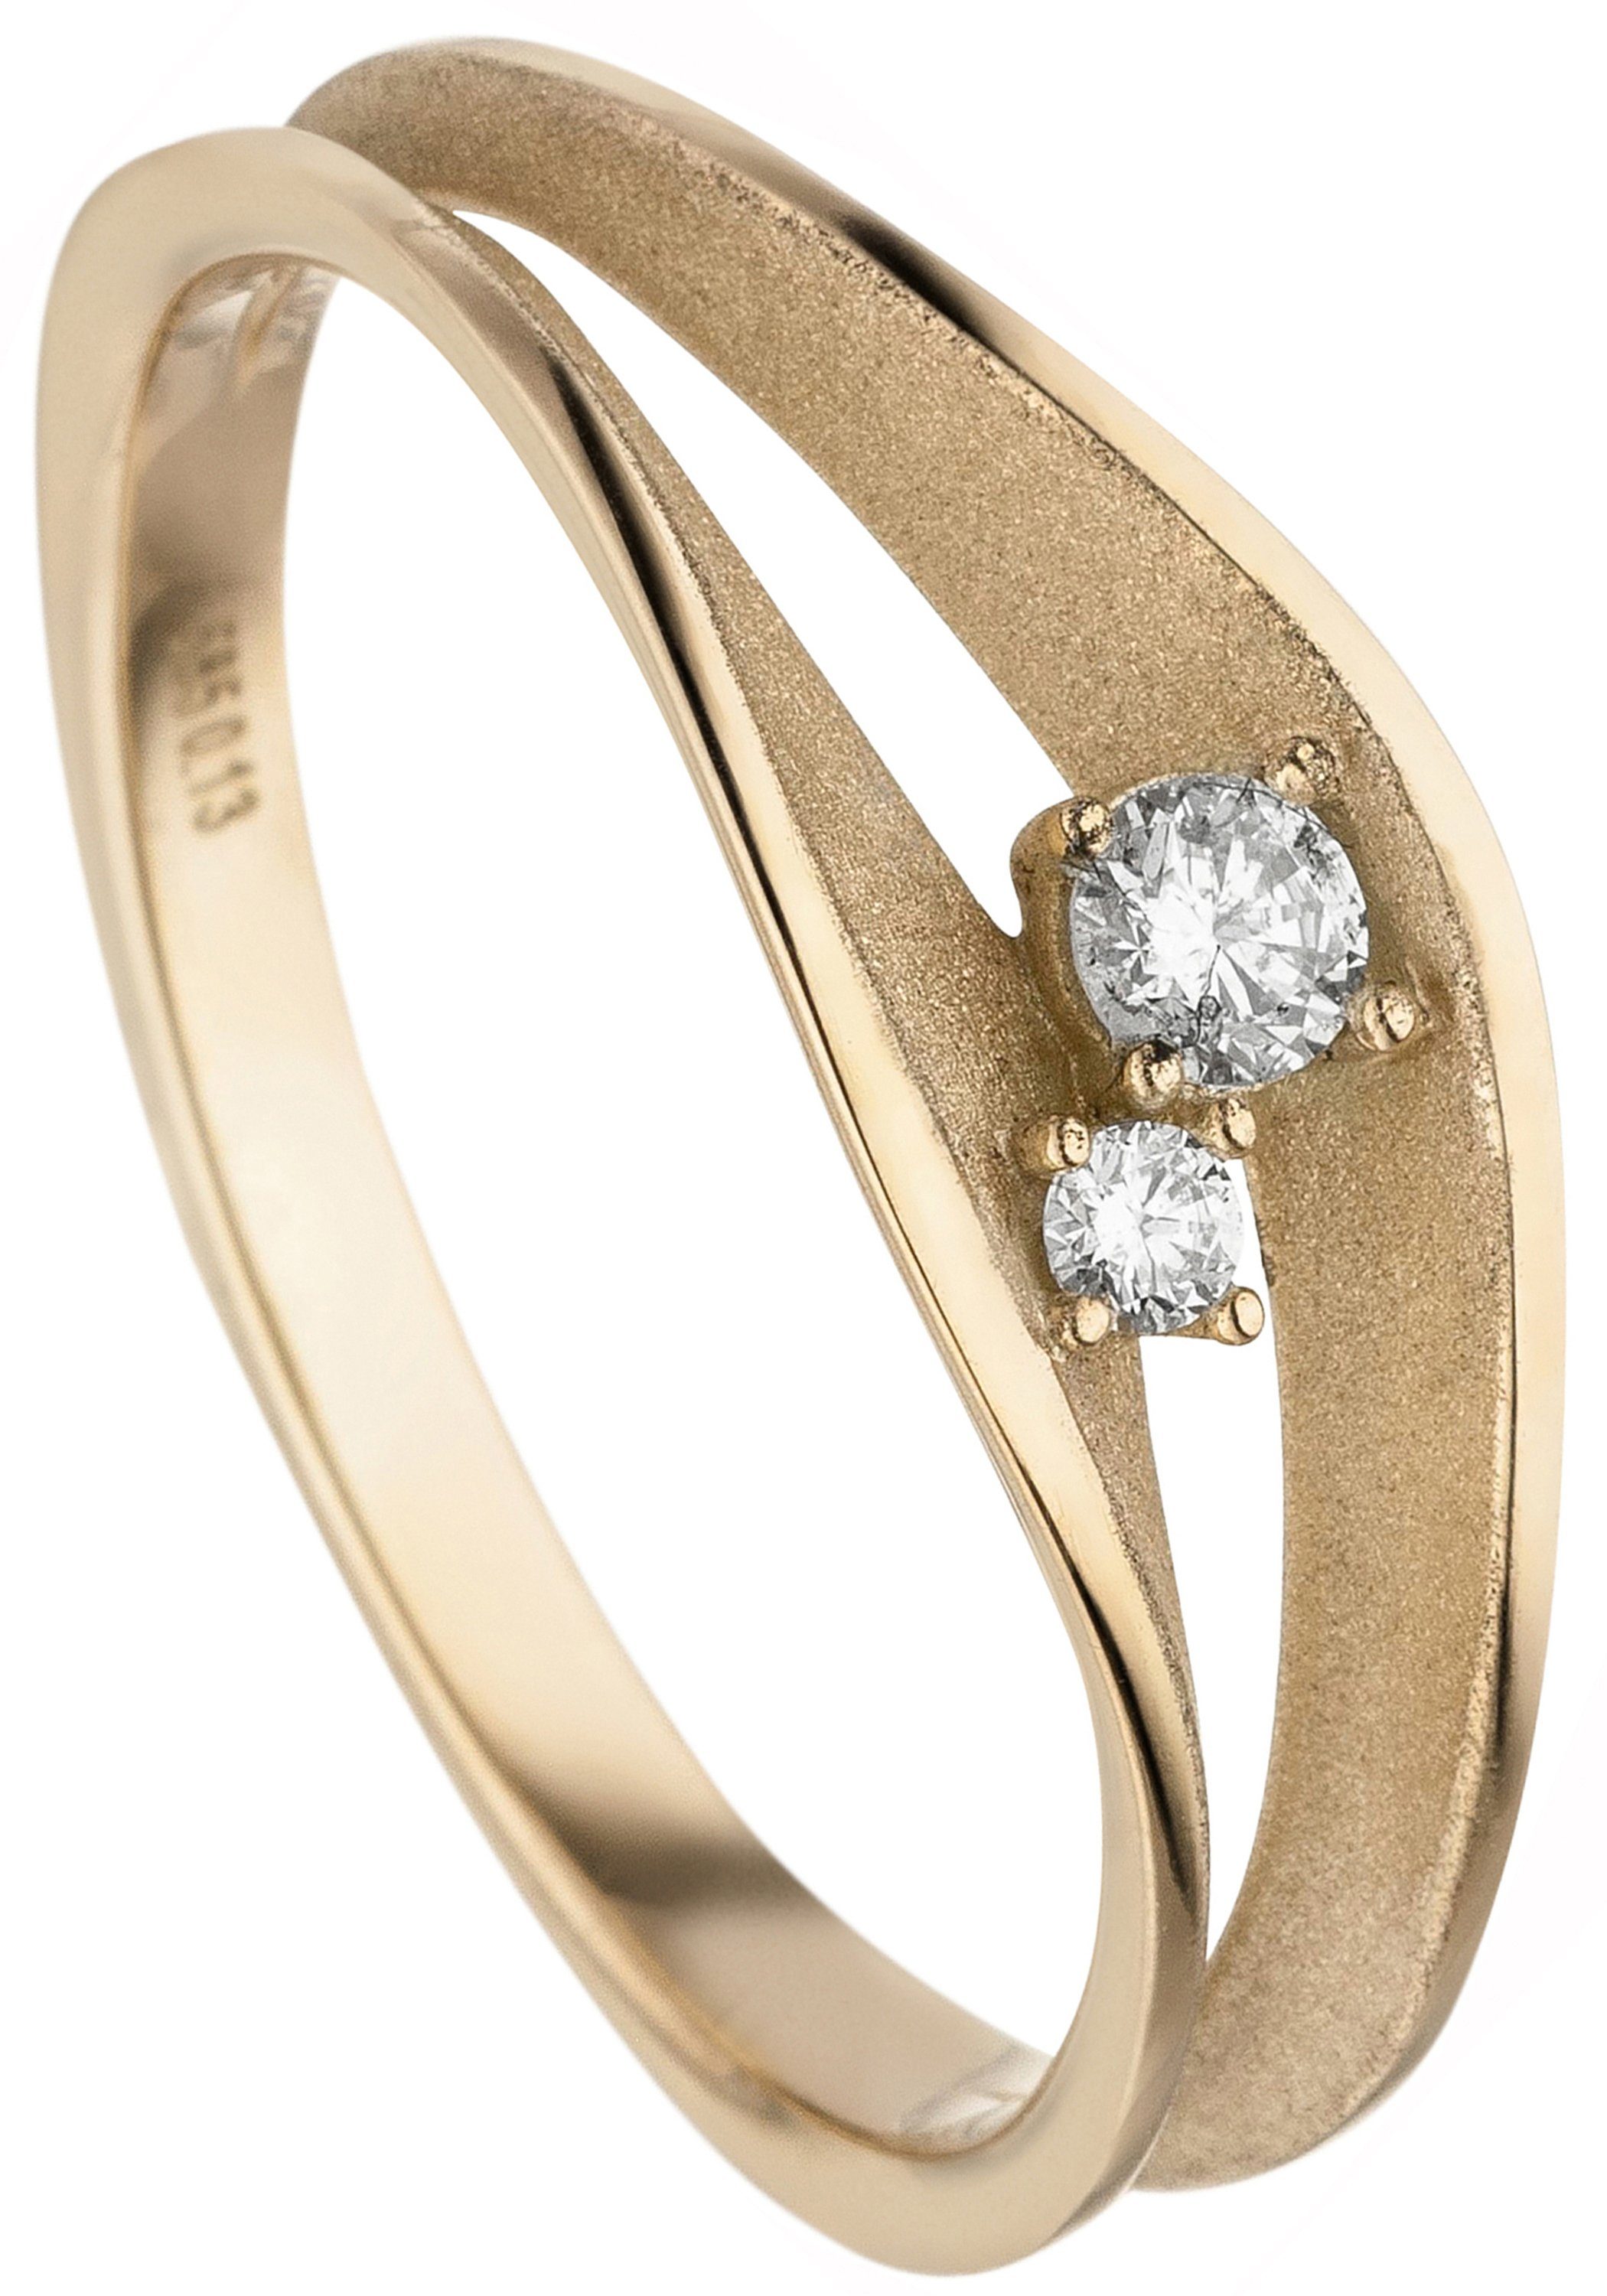 JOBO Fingerring Ring mit 2 Diamanten, 585 Gold